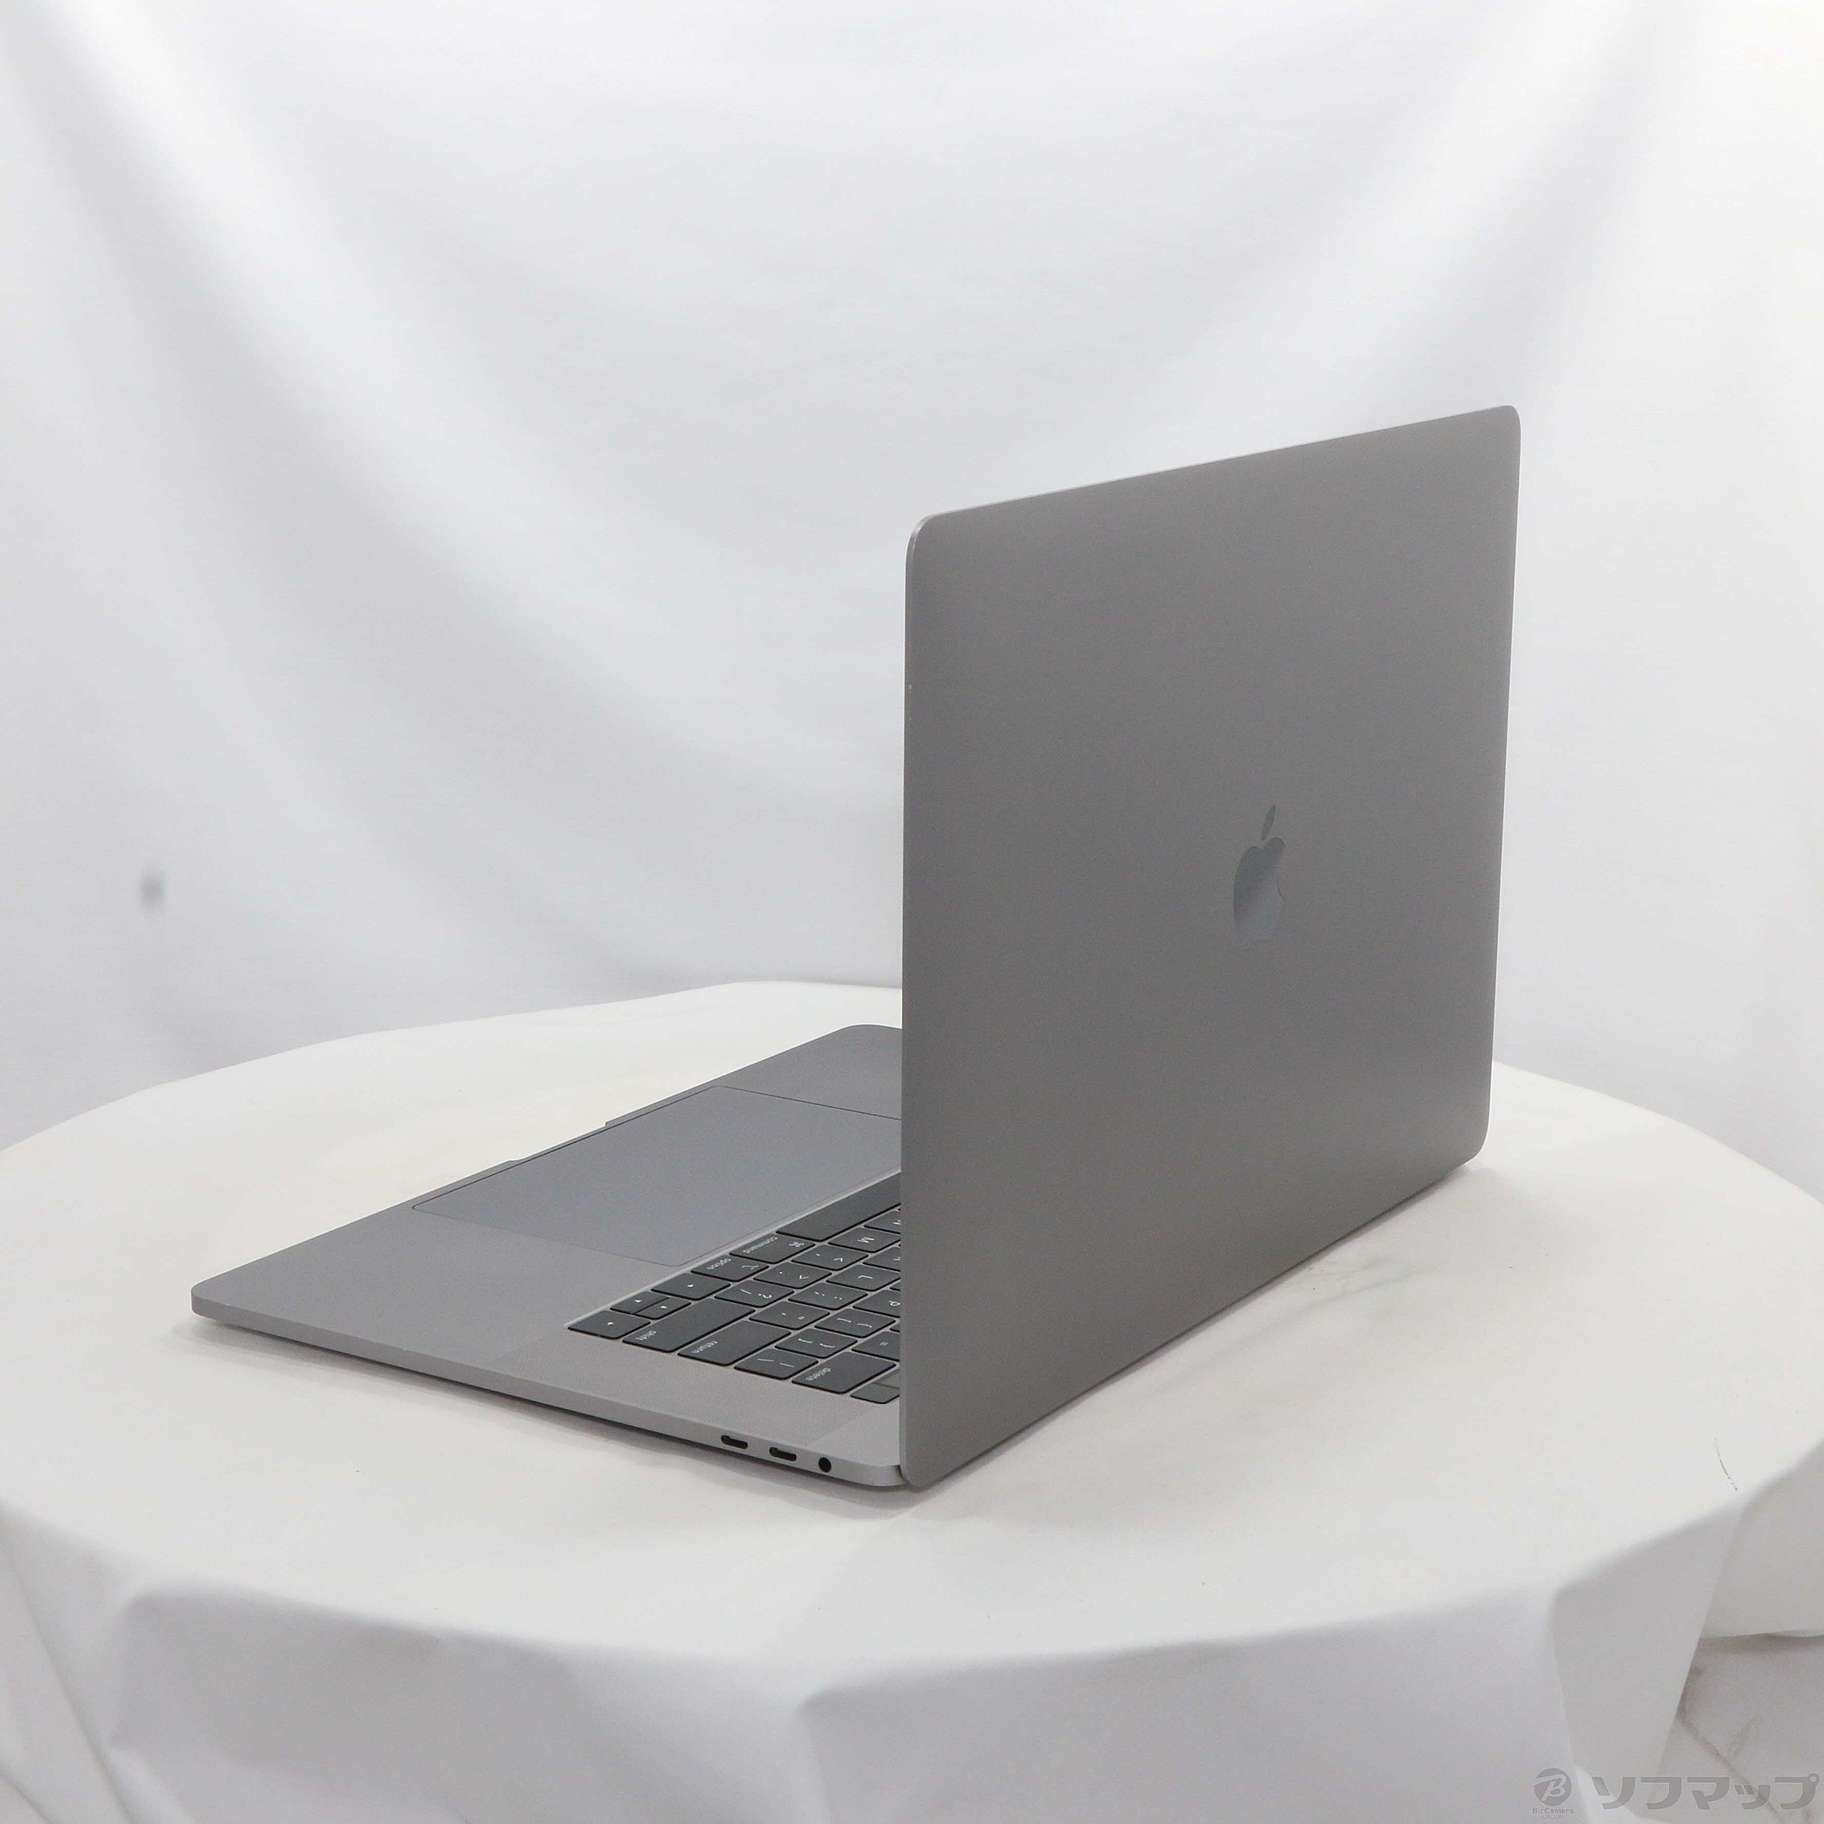 5120GB種類新品 APPLE MacBook Pro MV912J/A AppleCare - ノートPC